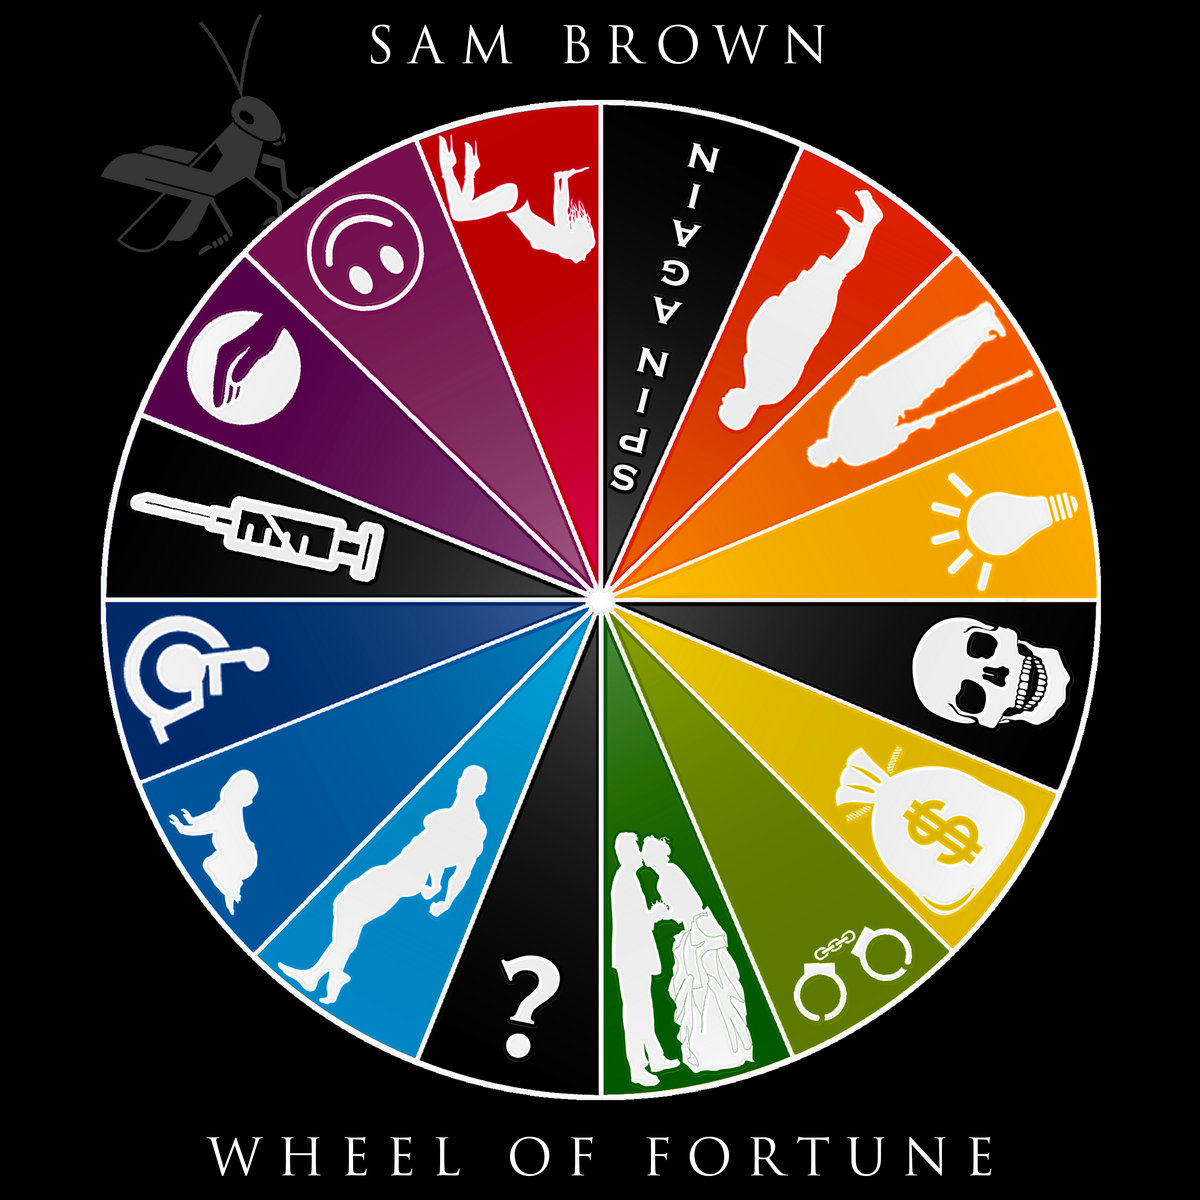 The fortune wheel tarot